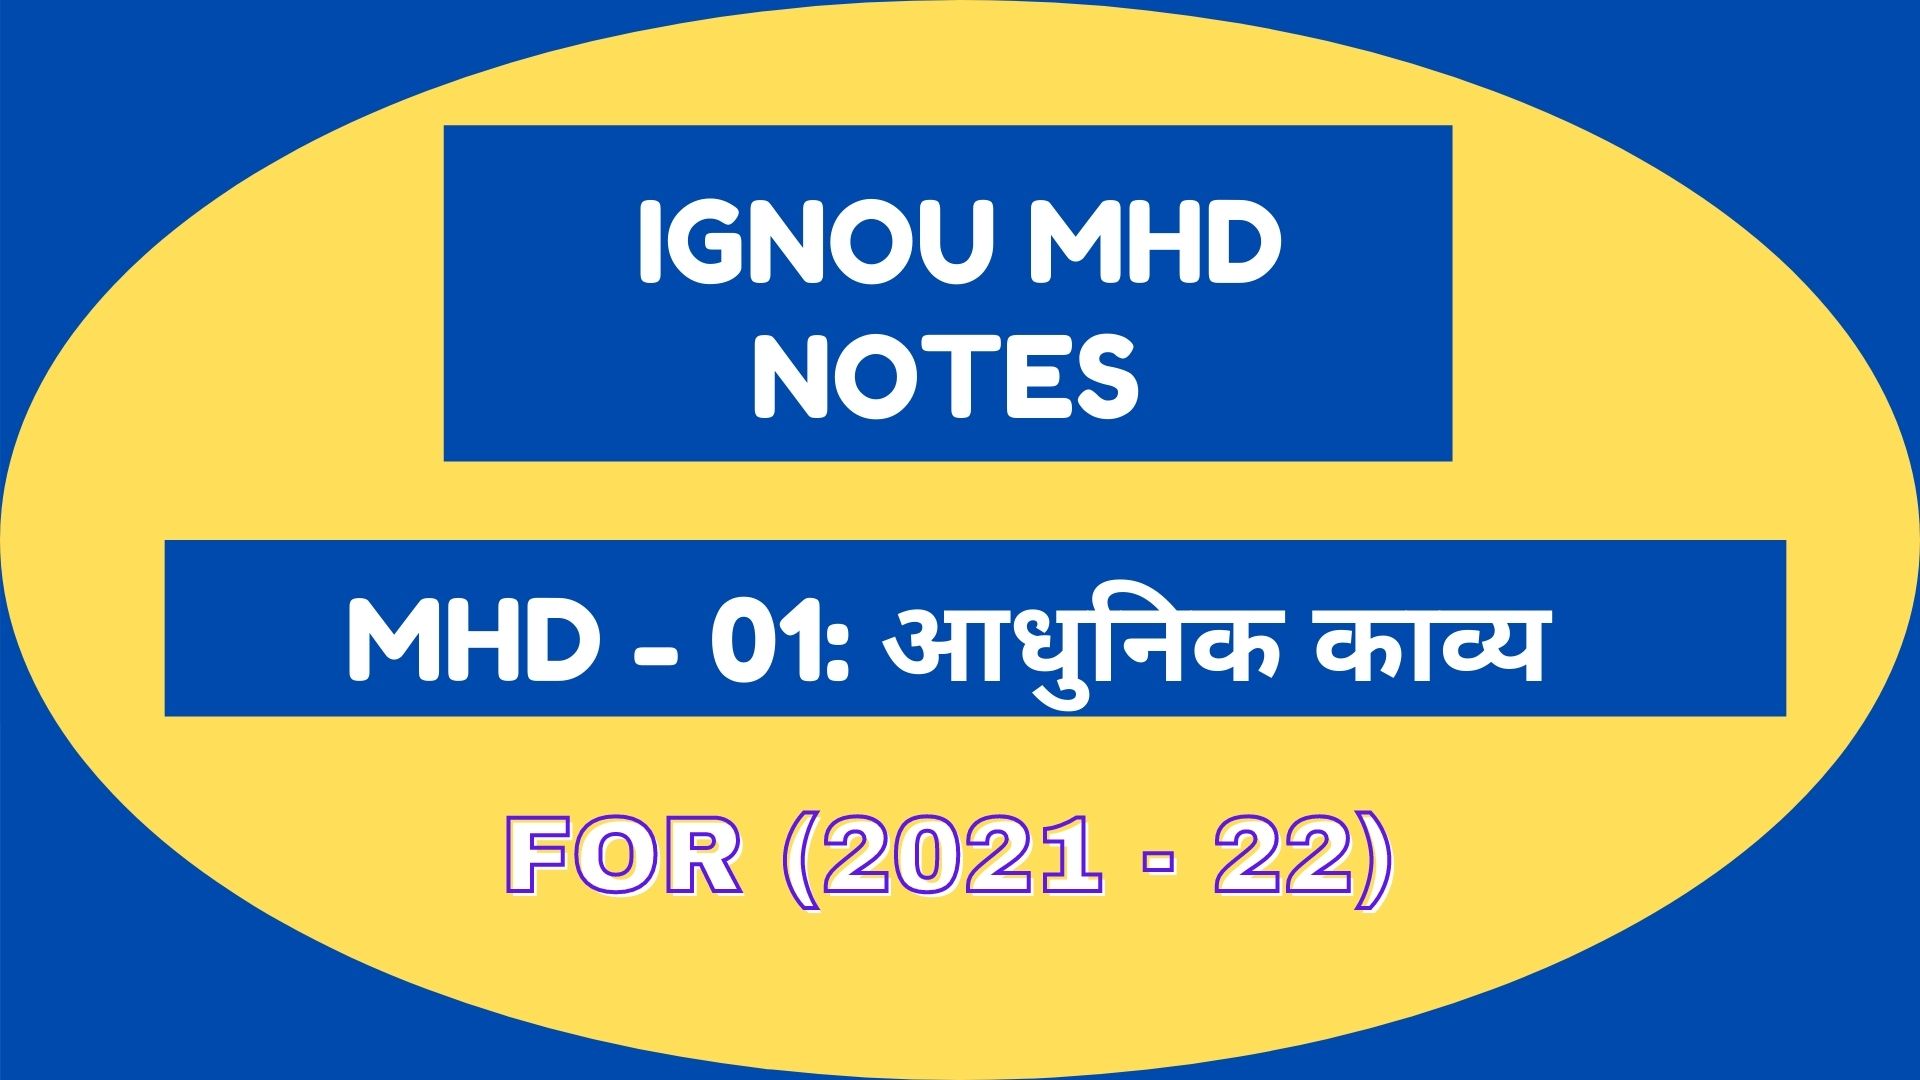 IGNOU MHD 01 Notes